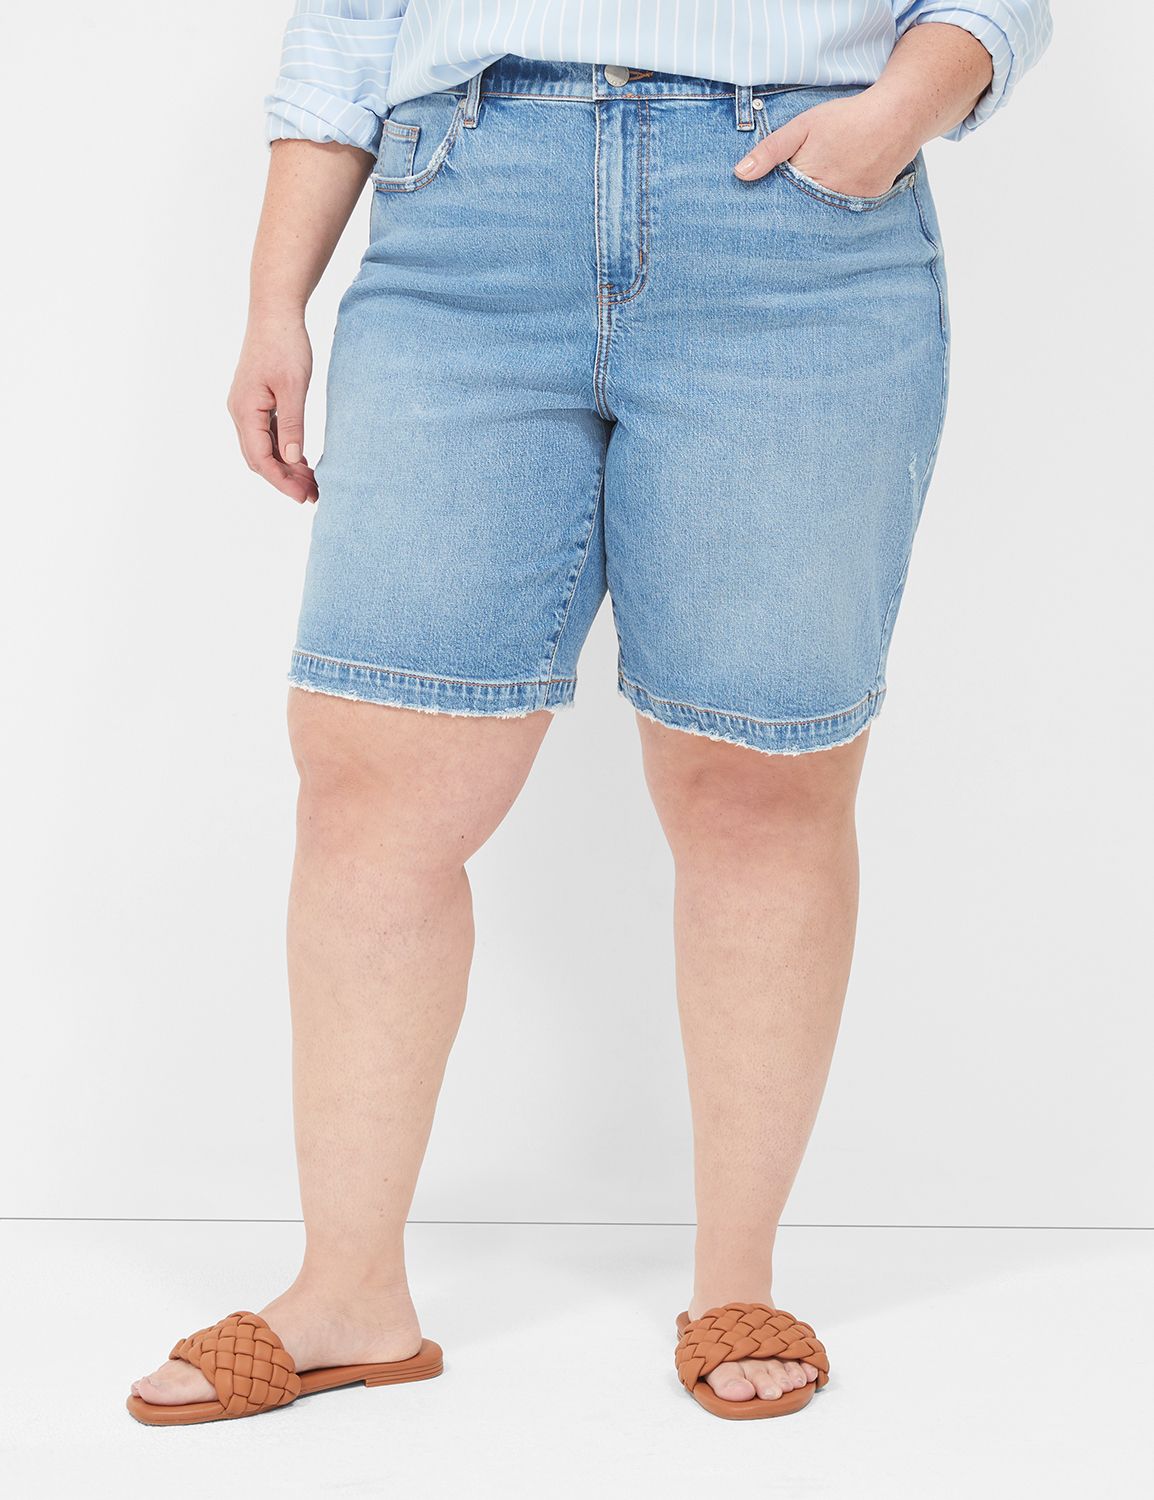 16 Jeans Women Plus Size Shorts Summer Scanties Running Shorts